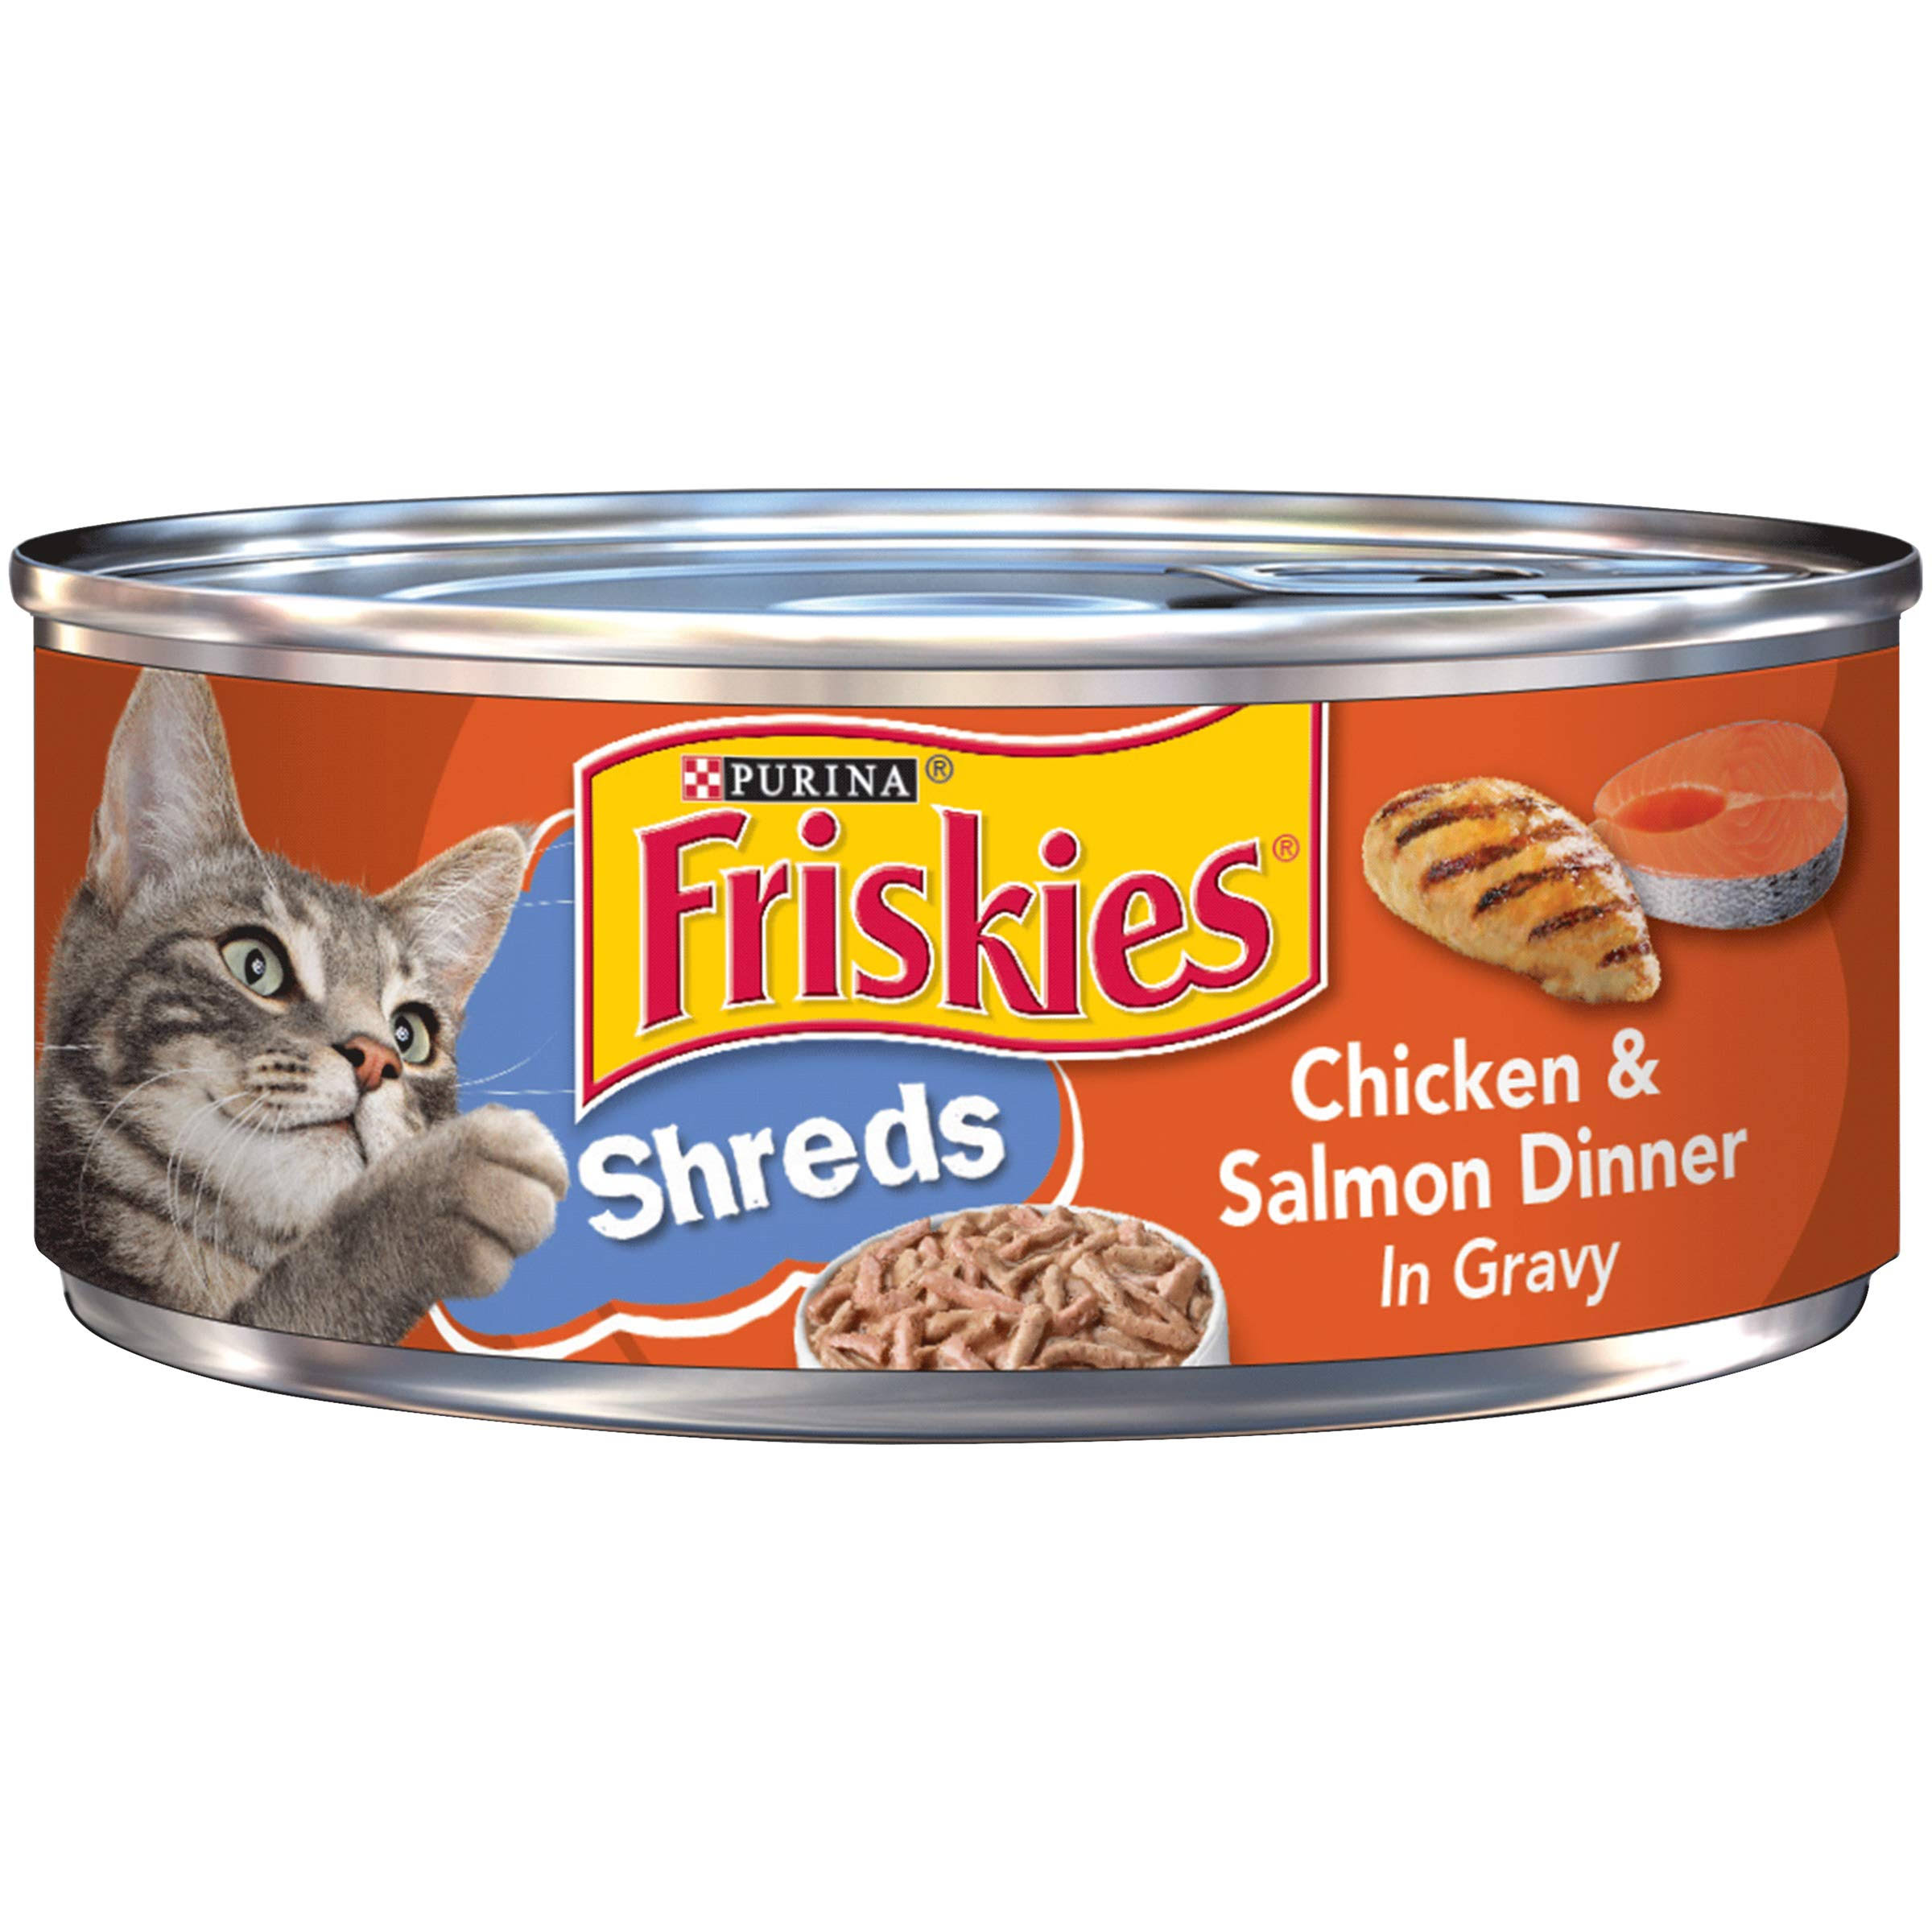 Purina Friskies Savory Shreds Cat Food - Chicken & Salmon Dinner in Gravy, 5.5oz